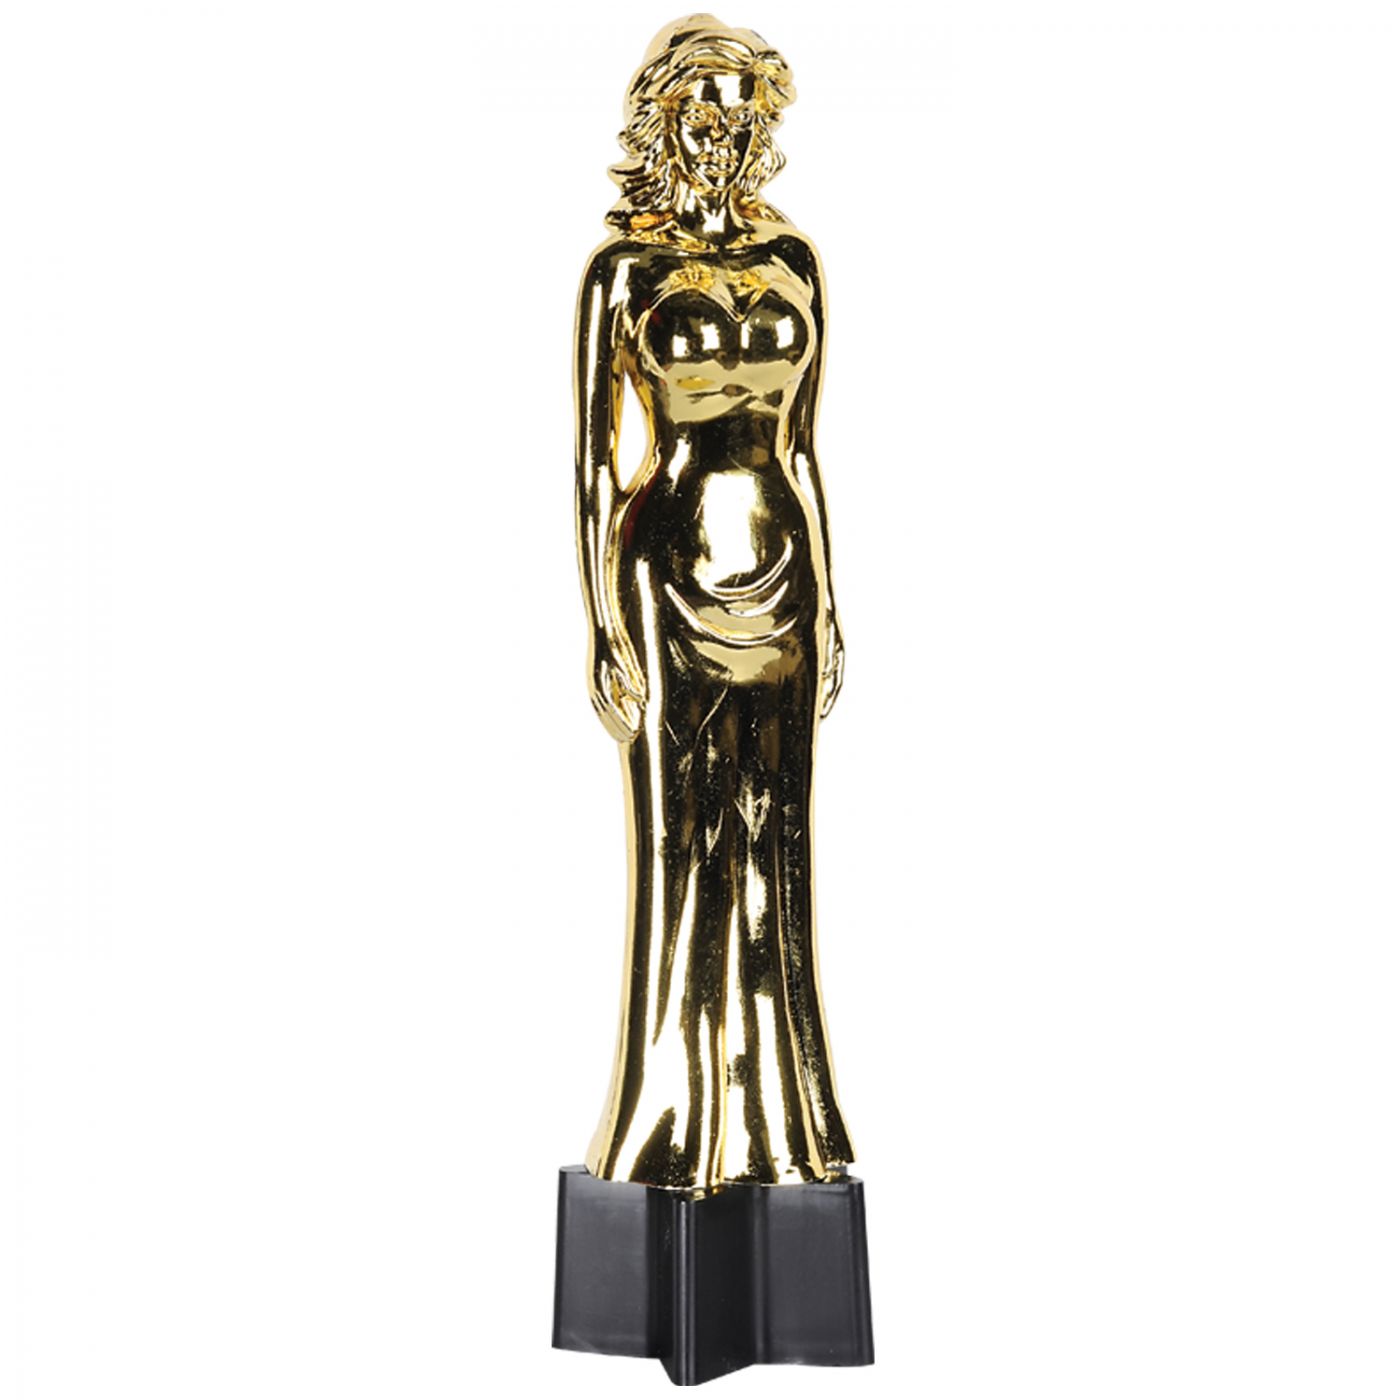 Awards Night Female Statuette (6) image